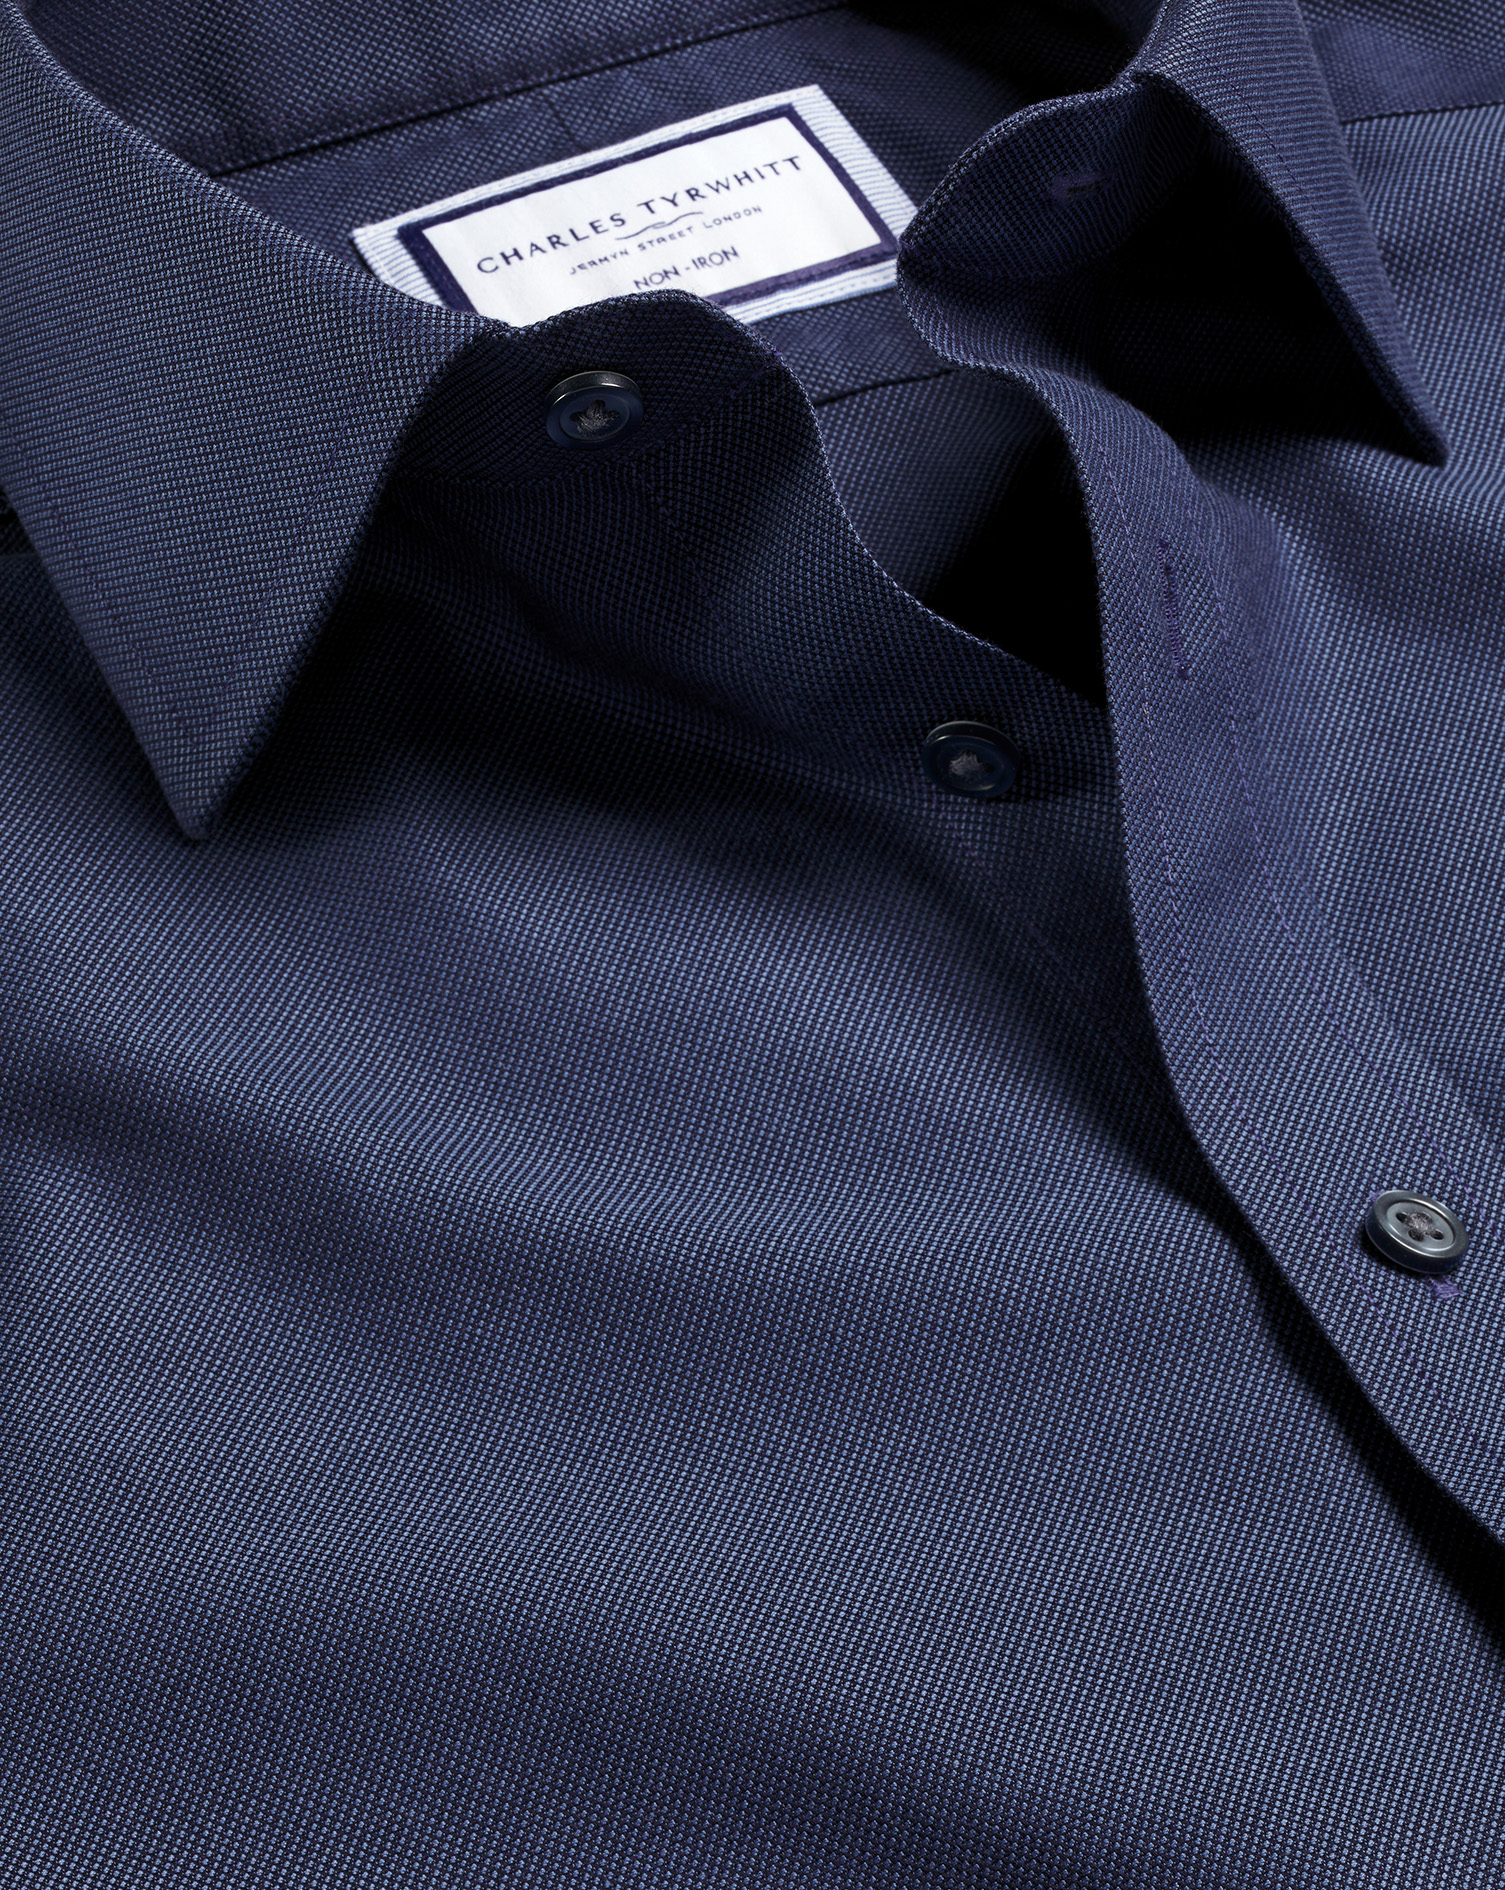 Men's Charles Tyrwhitt Non-Iron Royal Oxford Dress Shirt - French Blue Single Cuff Size 16.5/35 Cott